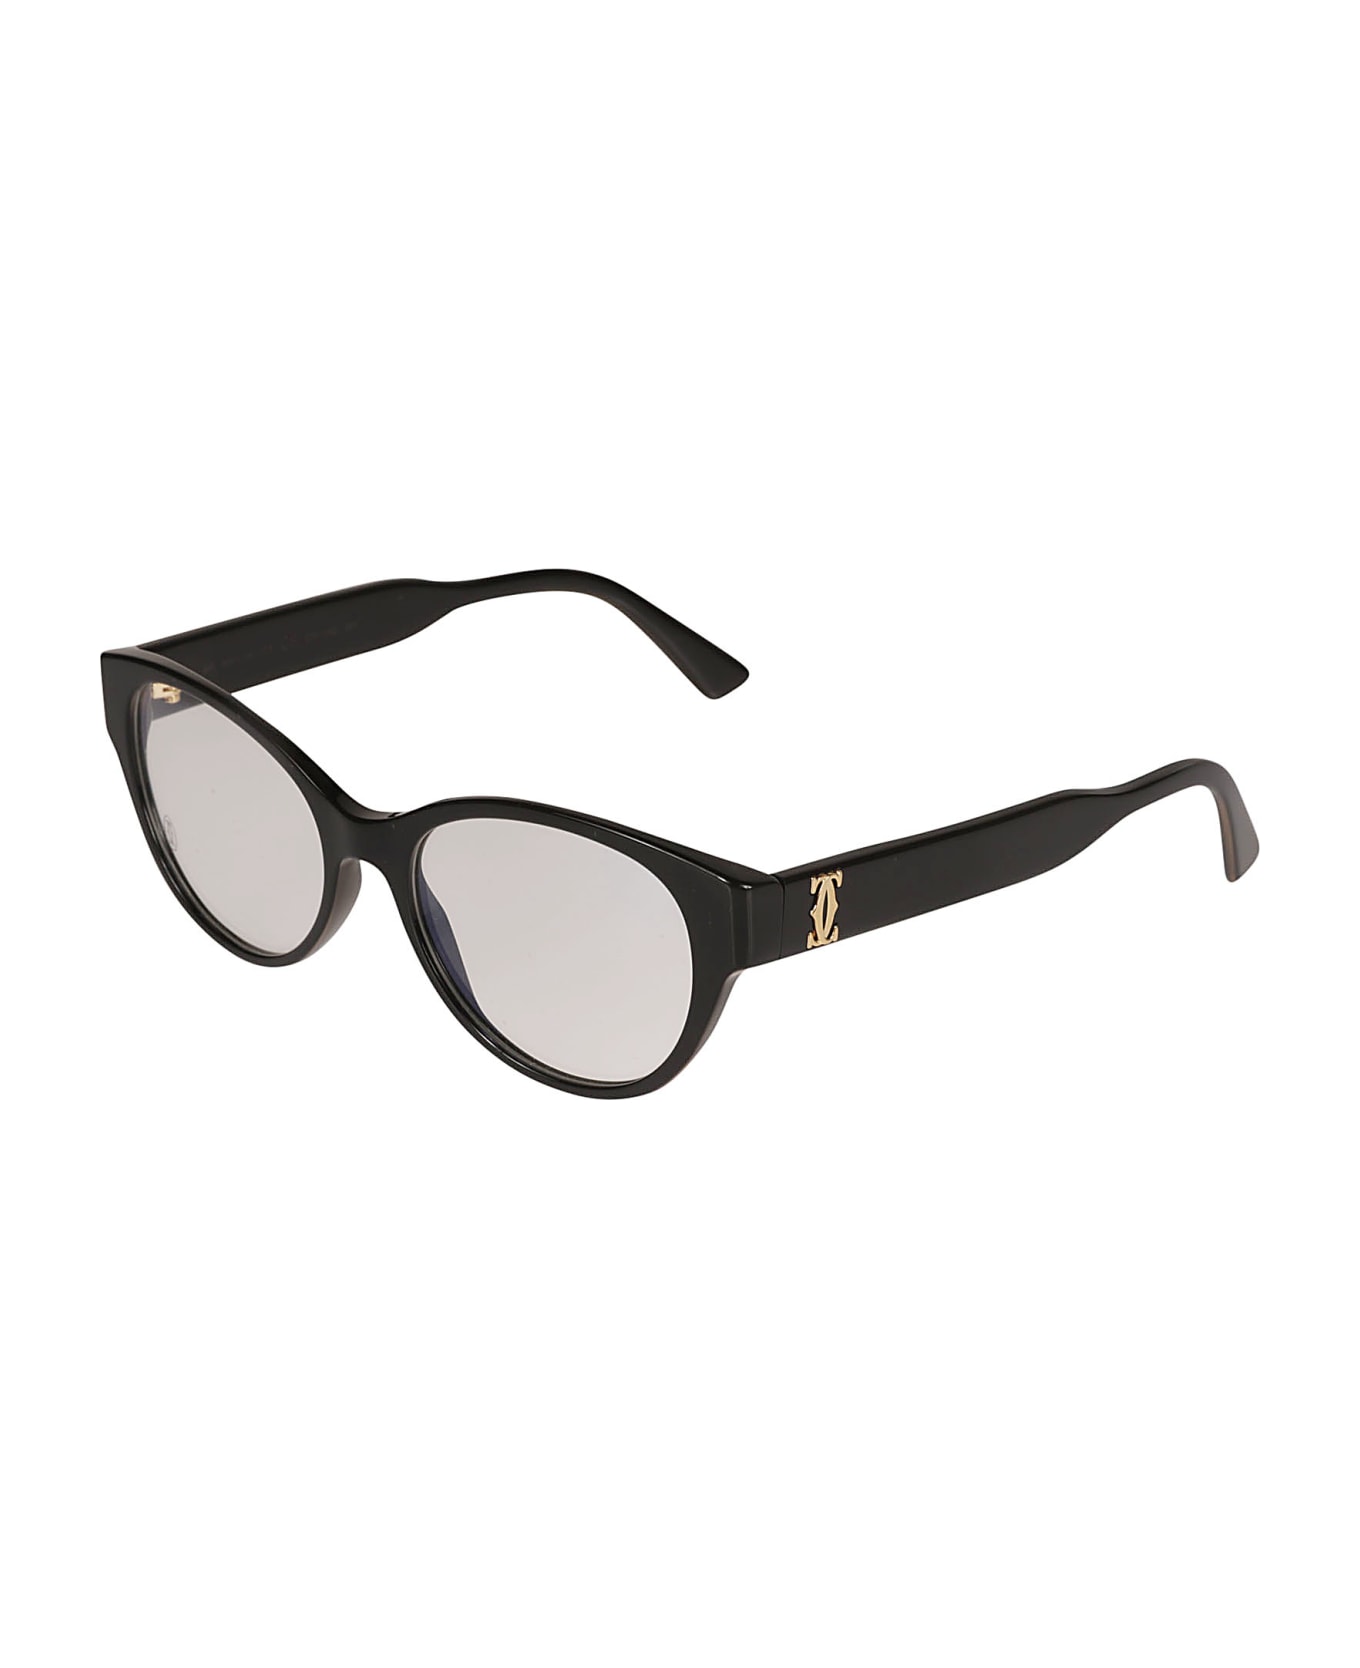 Cartier Eyewear Signature Double C Detail Glasses - 001 black black transpare サングラス